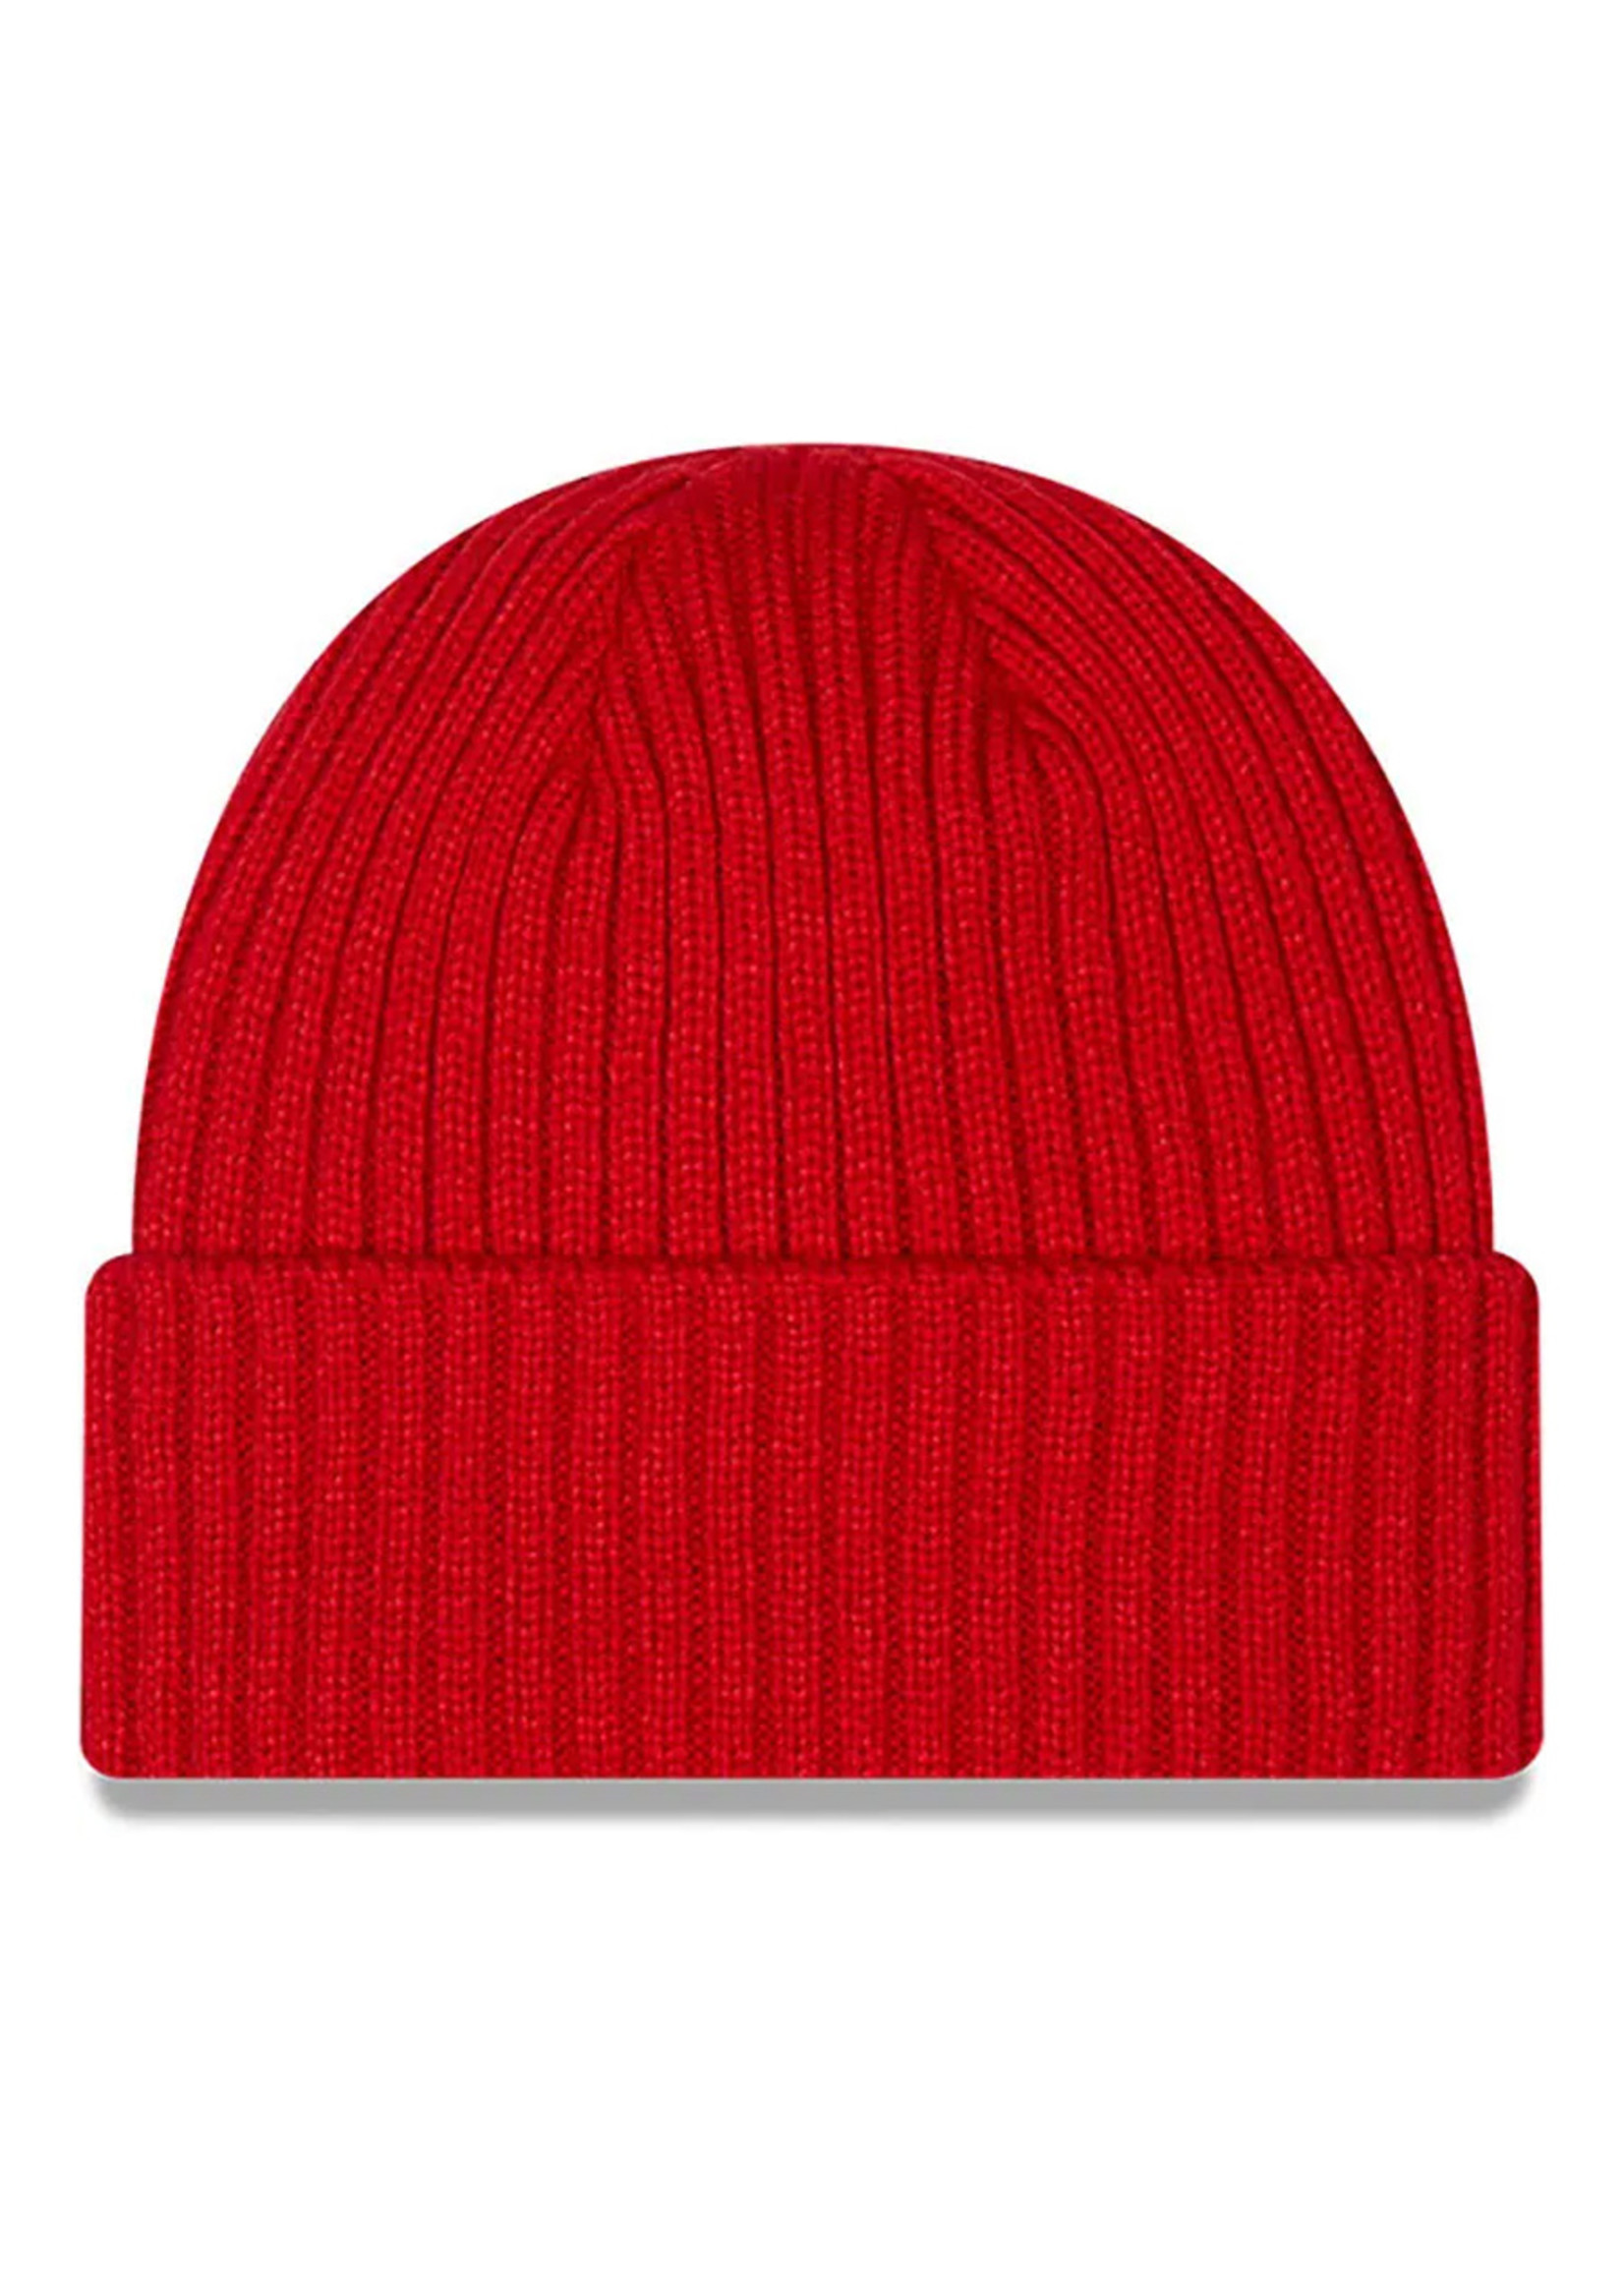 NEW ERA Ohio State Buckeyes Red Core Classic Knit Hat